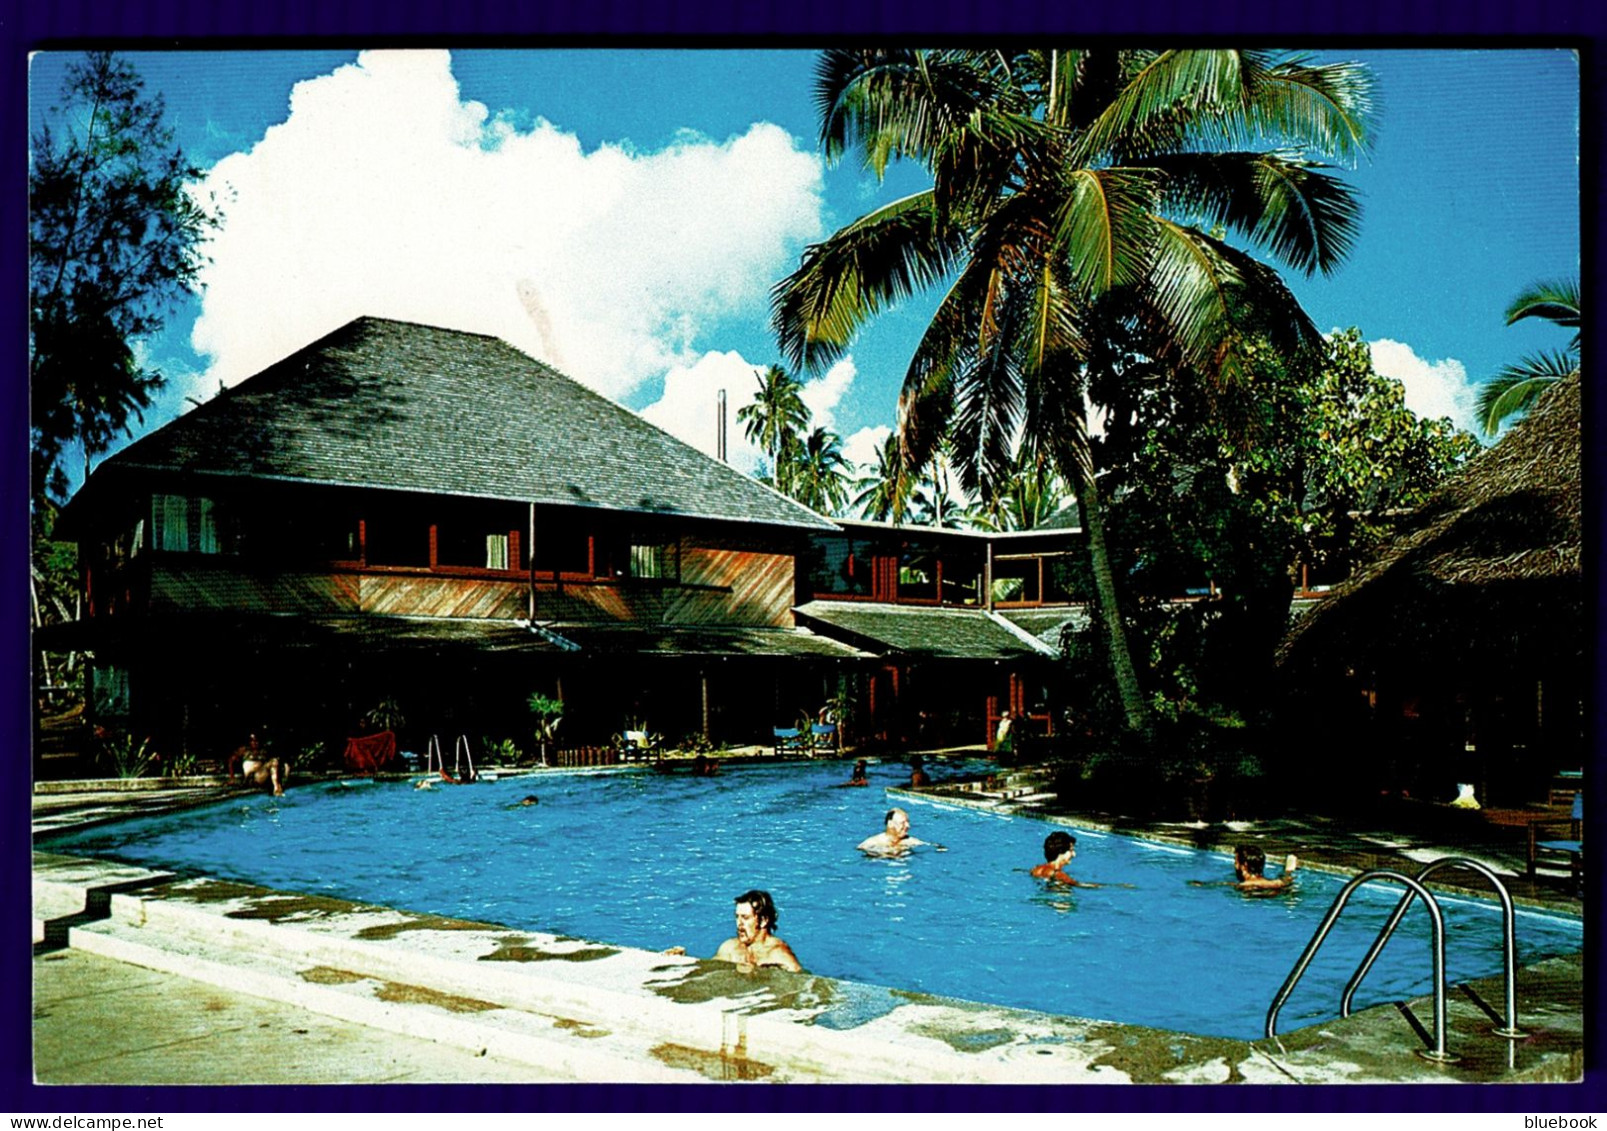 Ref 1647 - Cook Islands Postcard - Rarotongan Hotel Swimming Pool - Pacific Island - Cook Islands